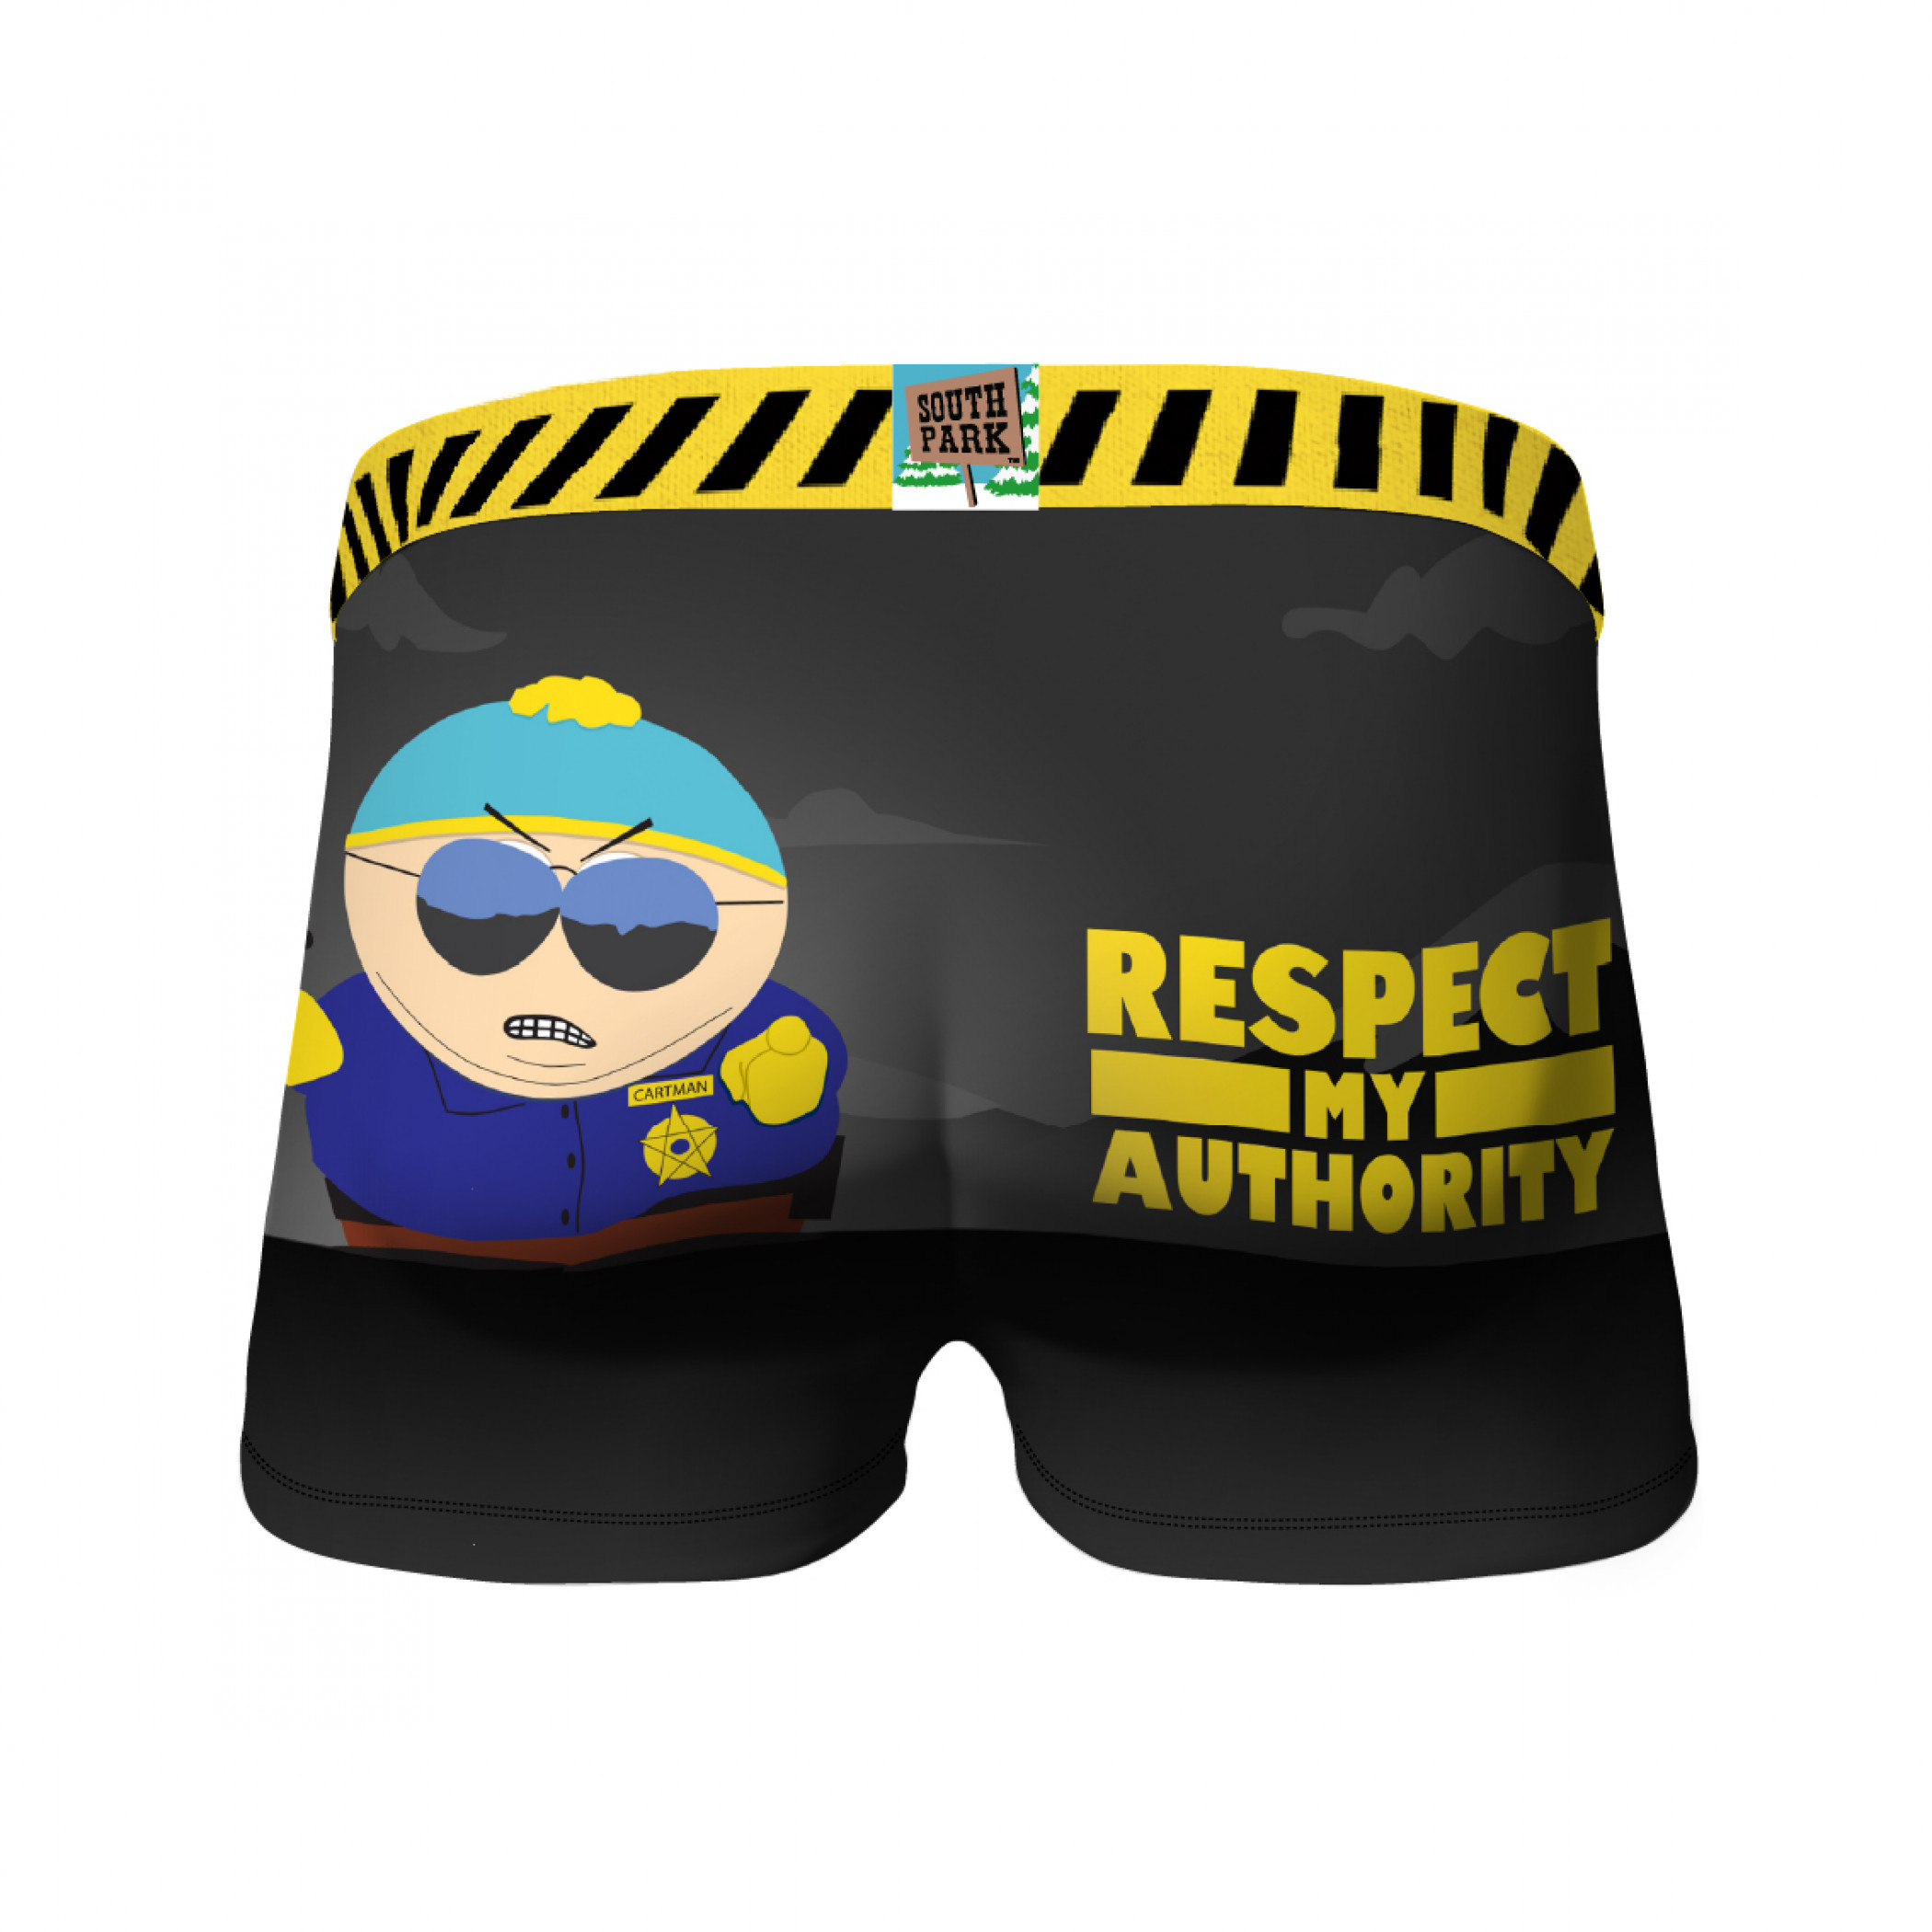 Crazy Boxers South Park Respect My Authority Boxer Briefs